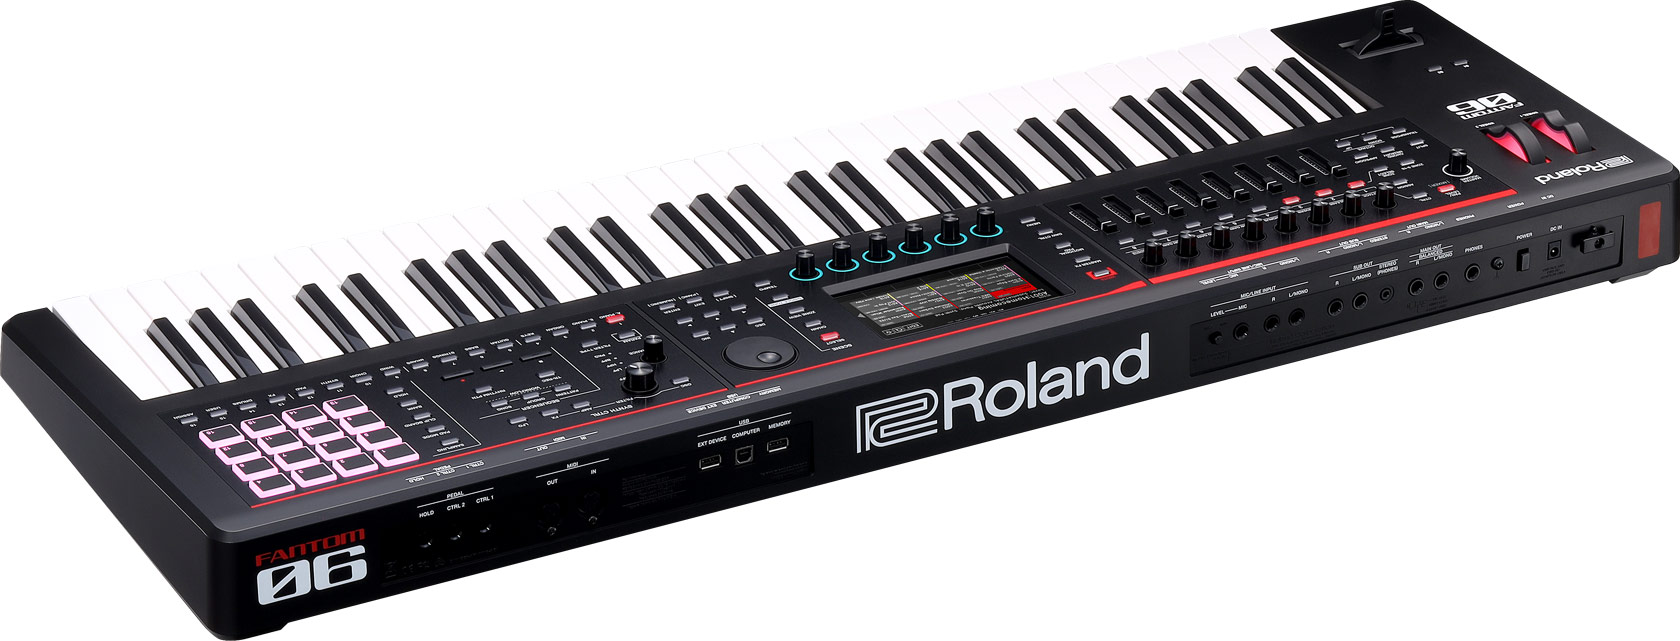 Roland FANTOM-06 Workstation Synthesizer